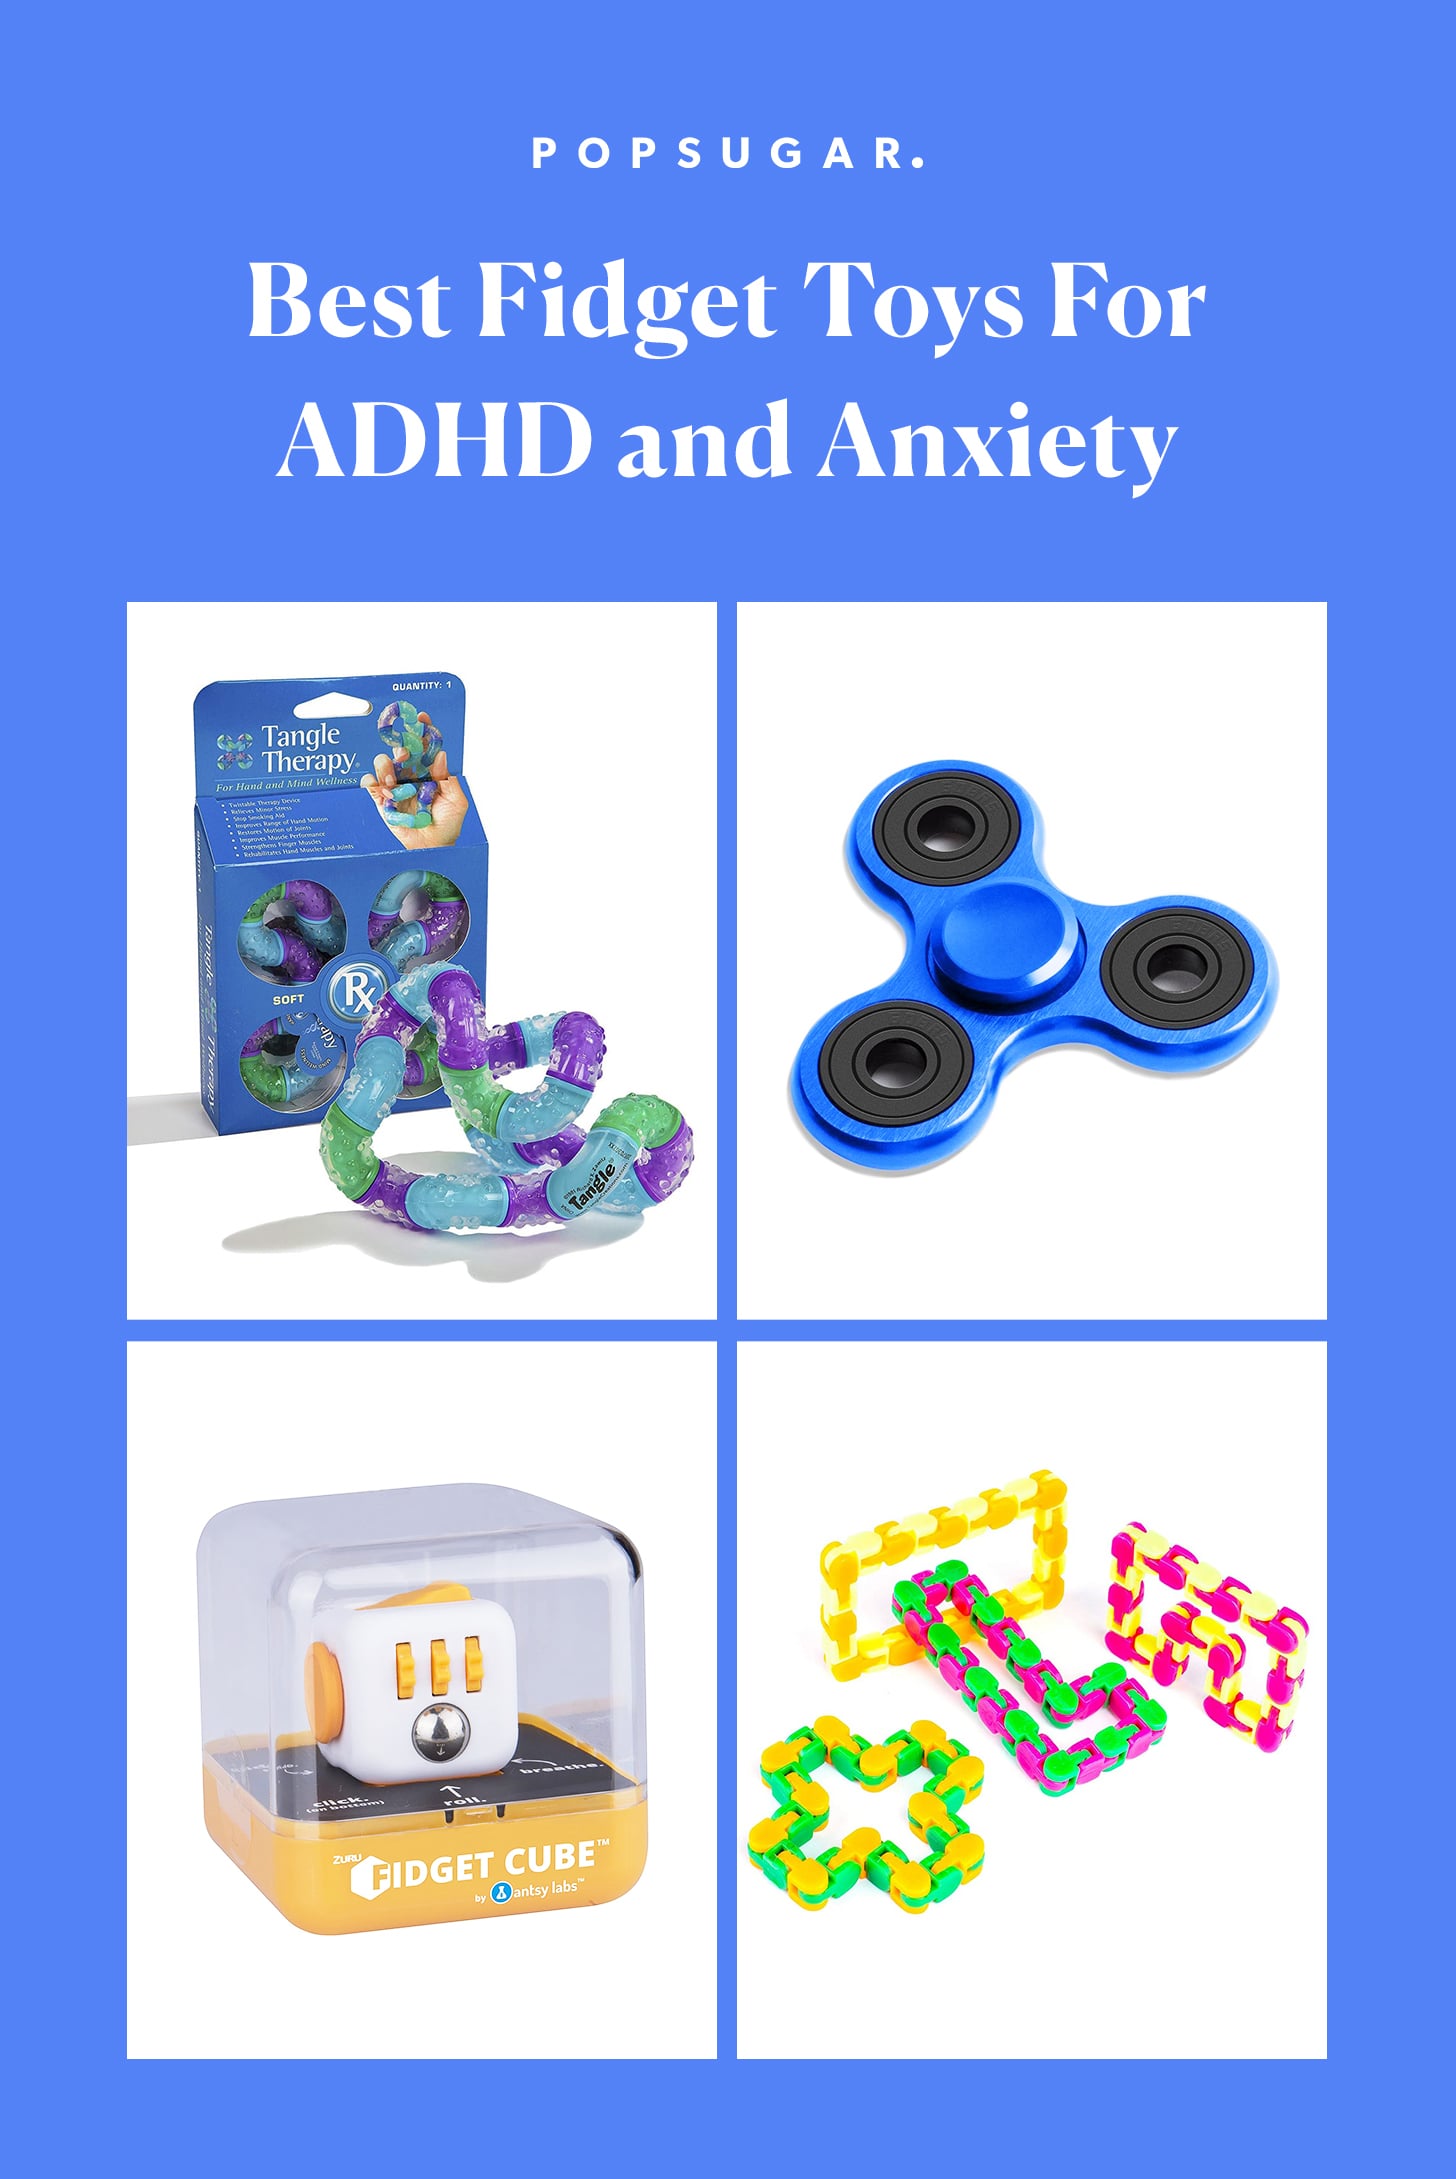 Fidget Cube Desk Toys Girls Boys ADHD Anxiety Adults Anti Stress Relief Toy 